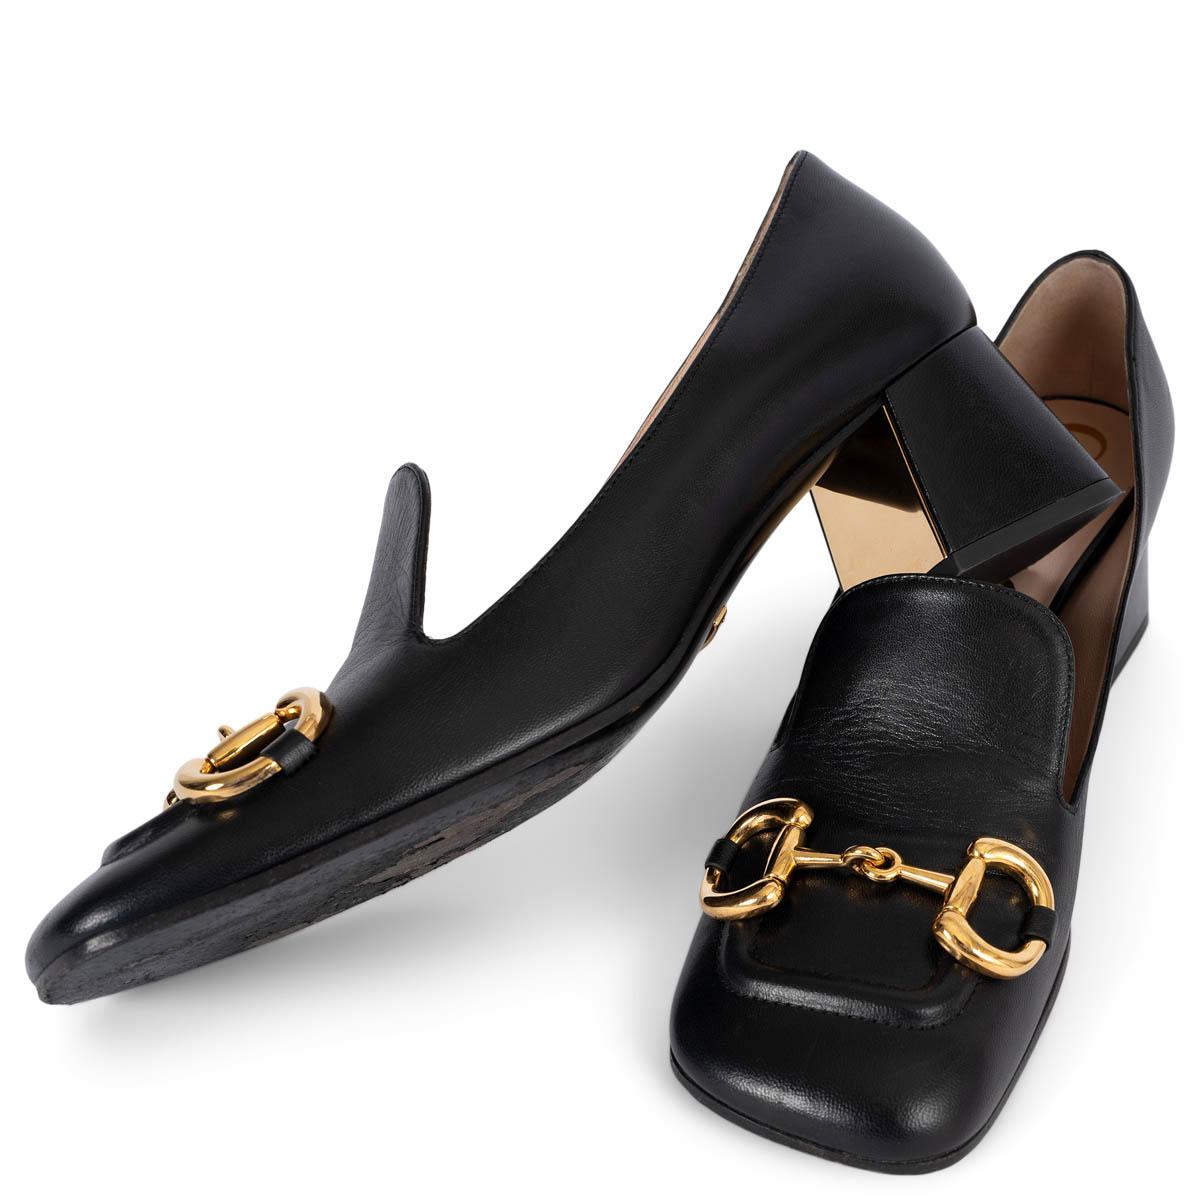 Gucci cuir noir HORSEBIT MID HEEL Chaussures 39 fit 40 en vente 2